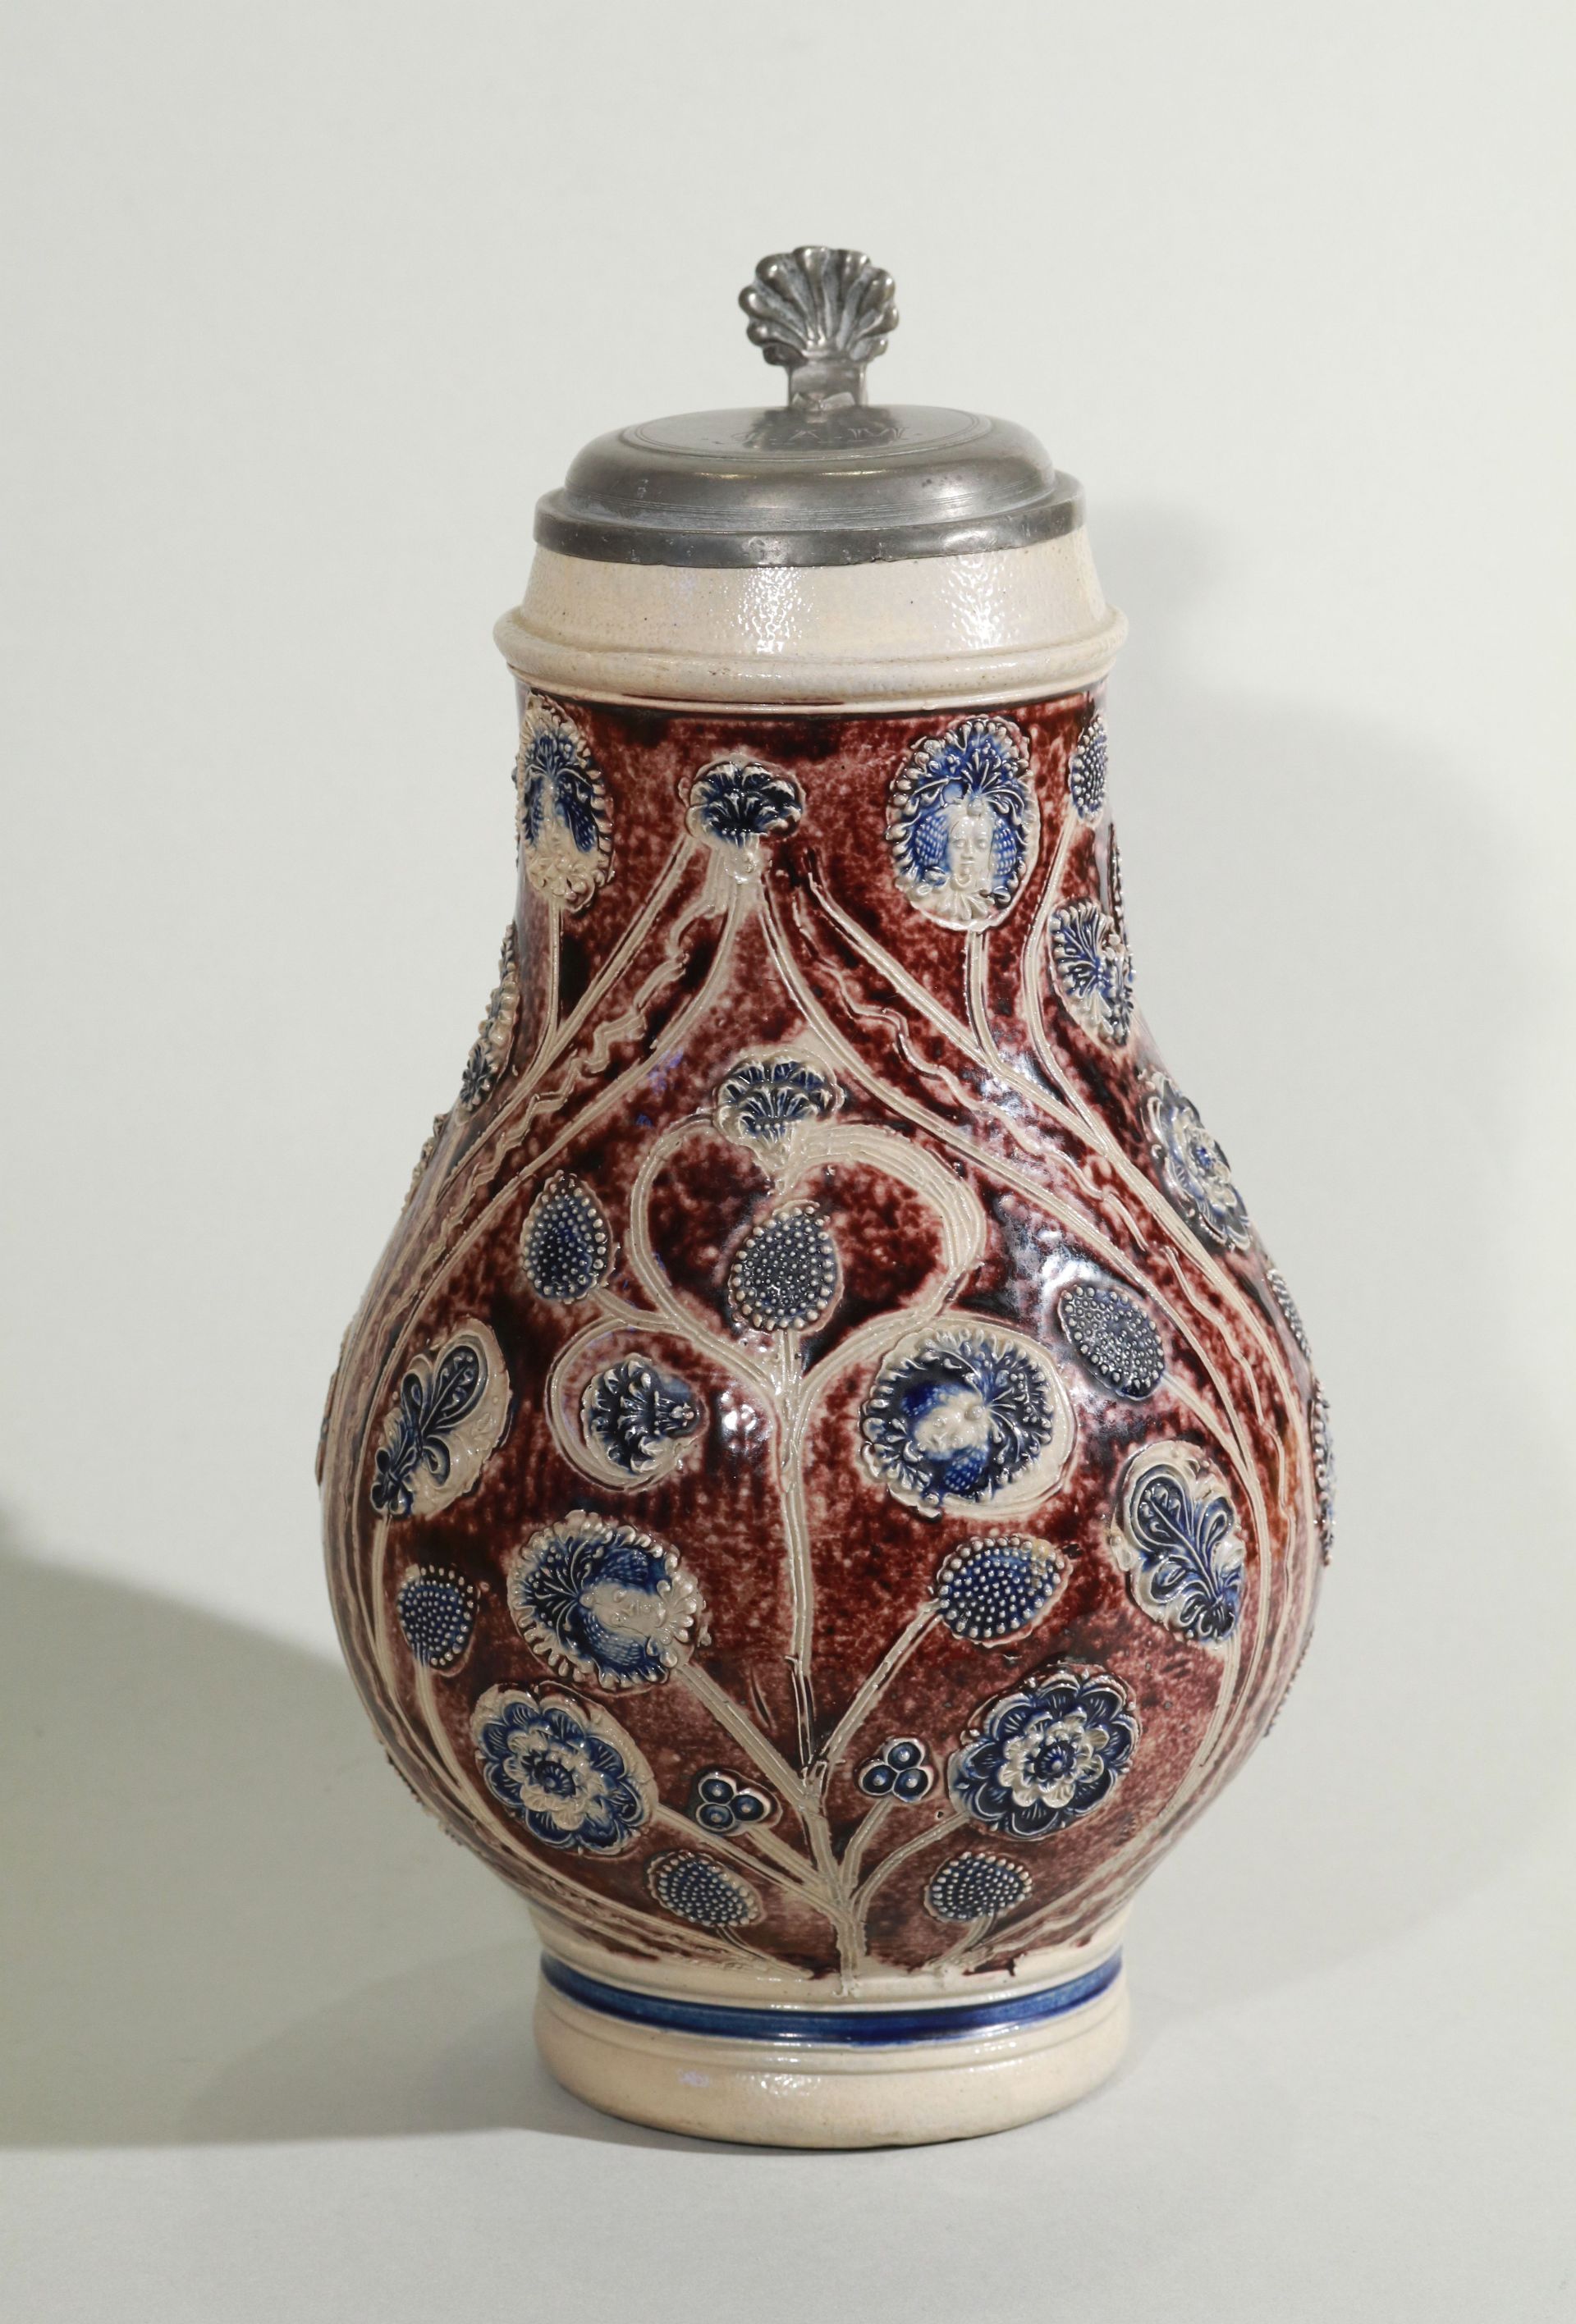 westerwald-westerwälder-birnkrug-um-1680 - blue and manganese salt glazed stoneware - jug